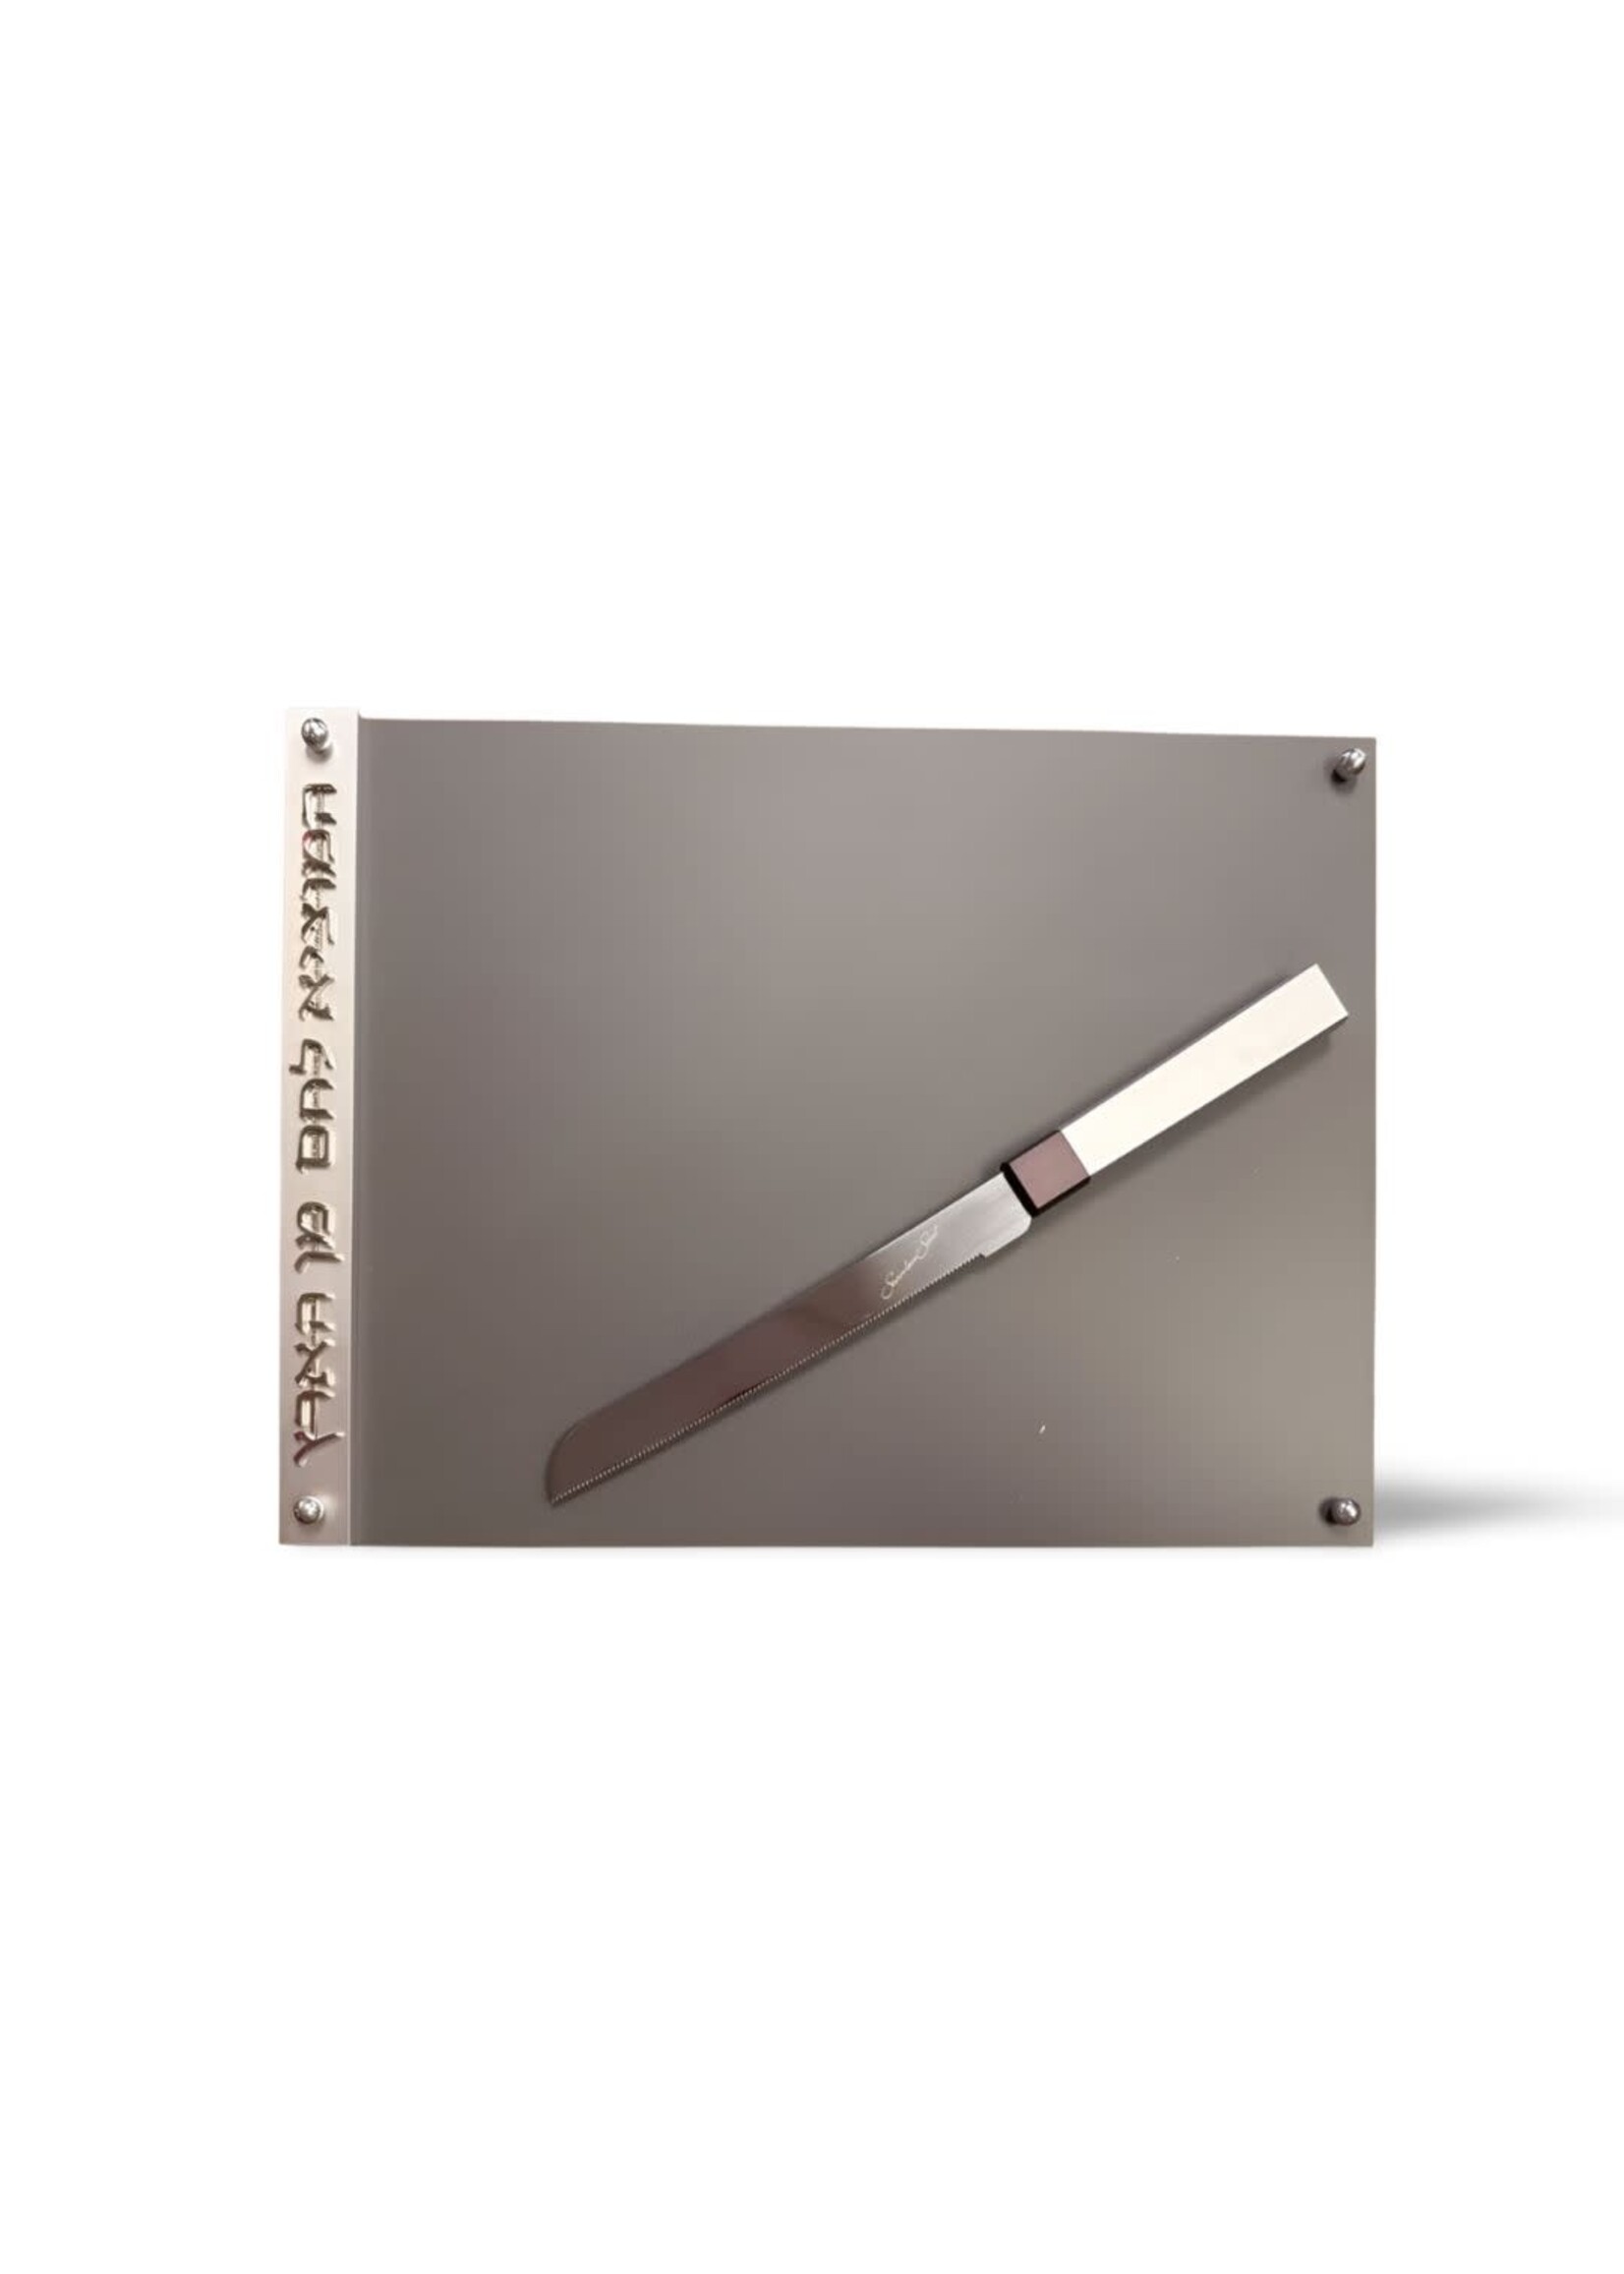 CHALLA BOARD & KNIFE SILVER